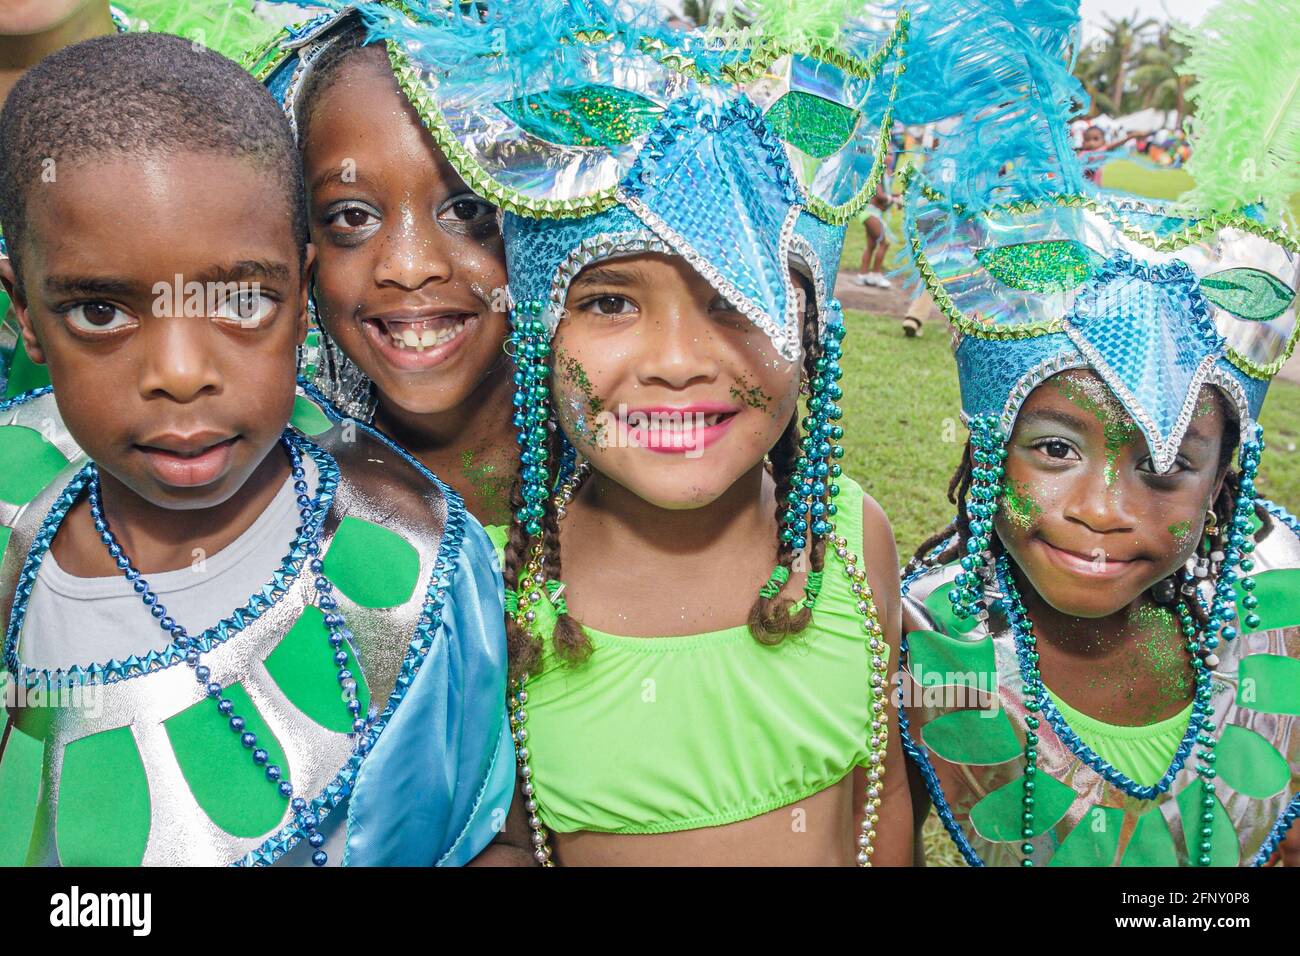 Miami Florida, Coconut Grove Pfau Park Miami Kiddies Karneval, Karibik Mardi Gras Kostüm Kostüme Outfit Mädchen Jungen Schwarze Kinder, Stockfoto